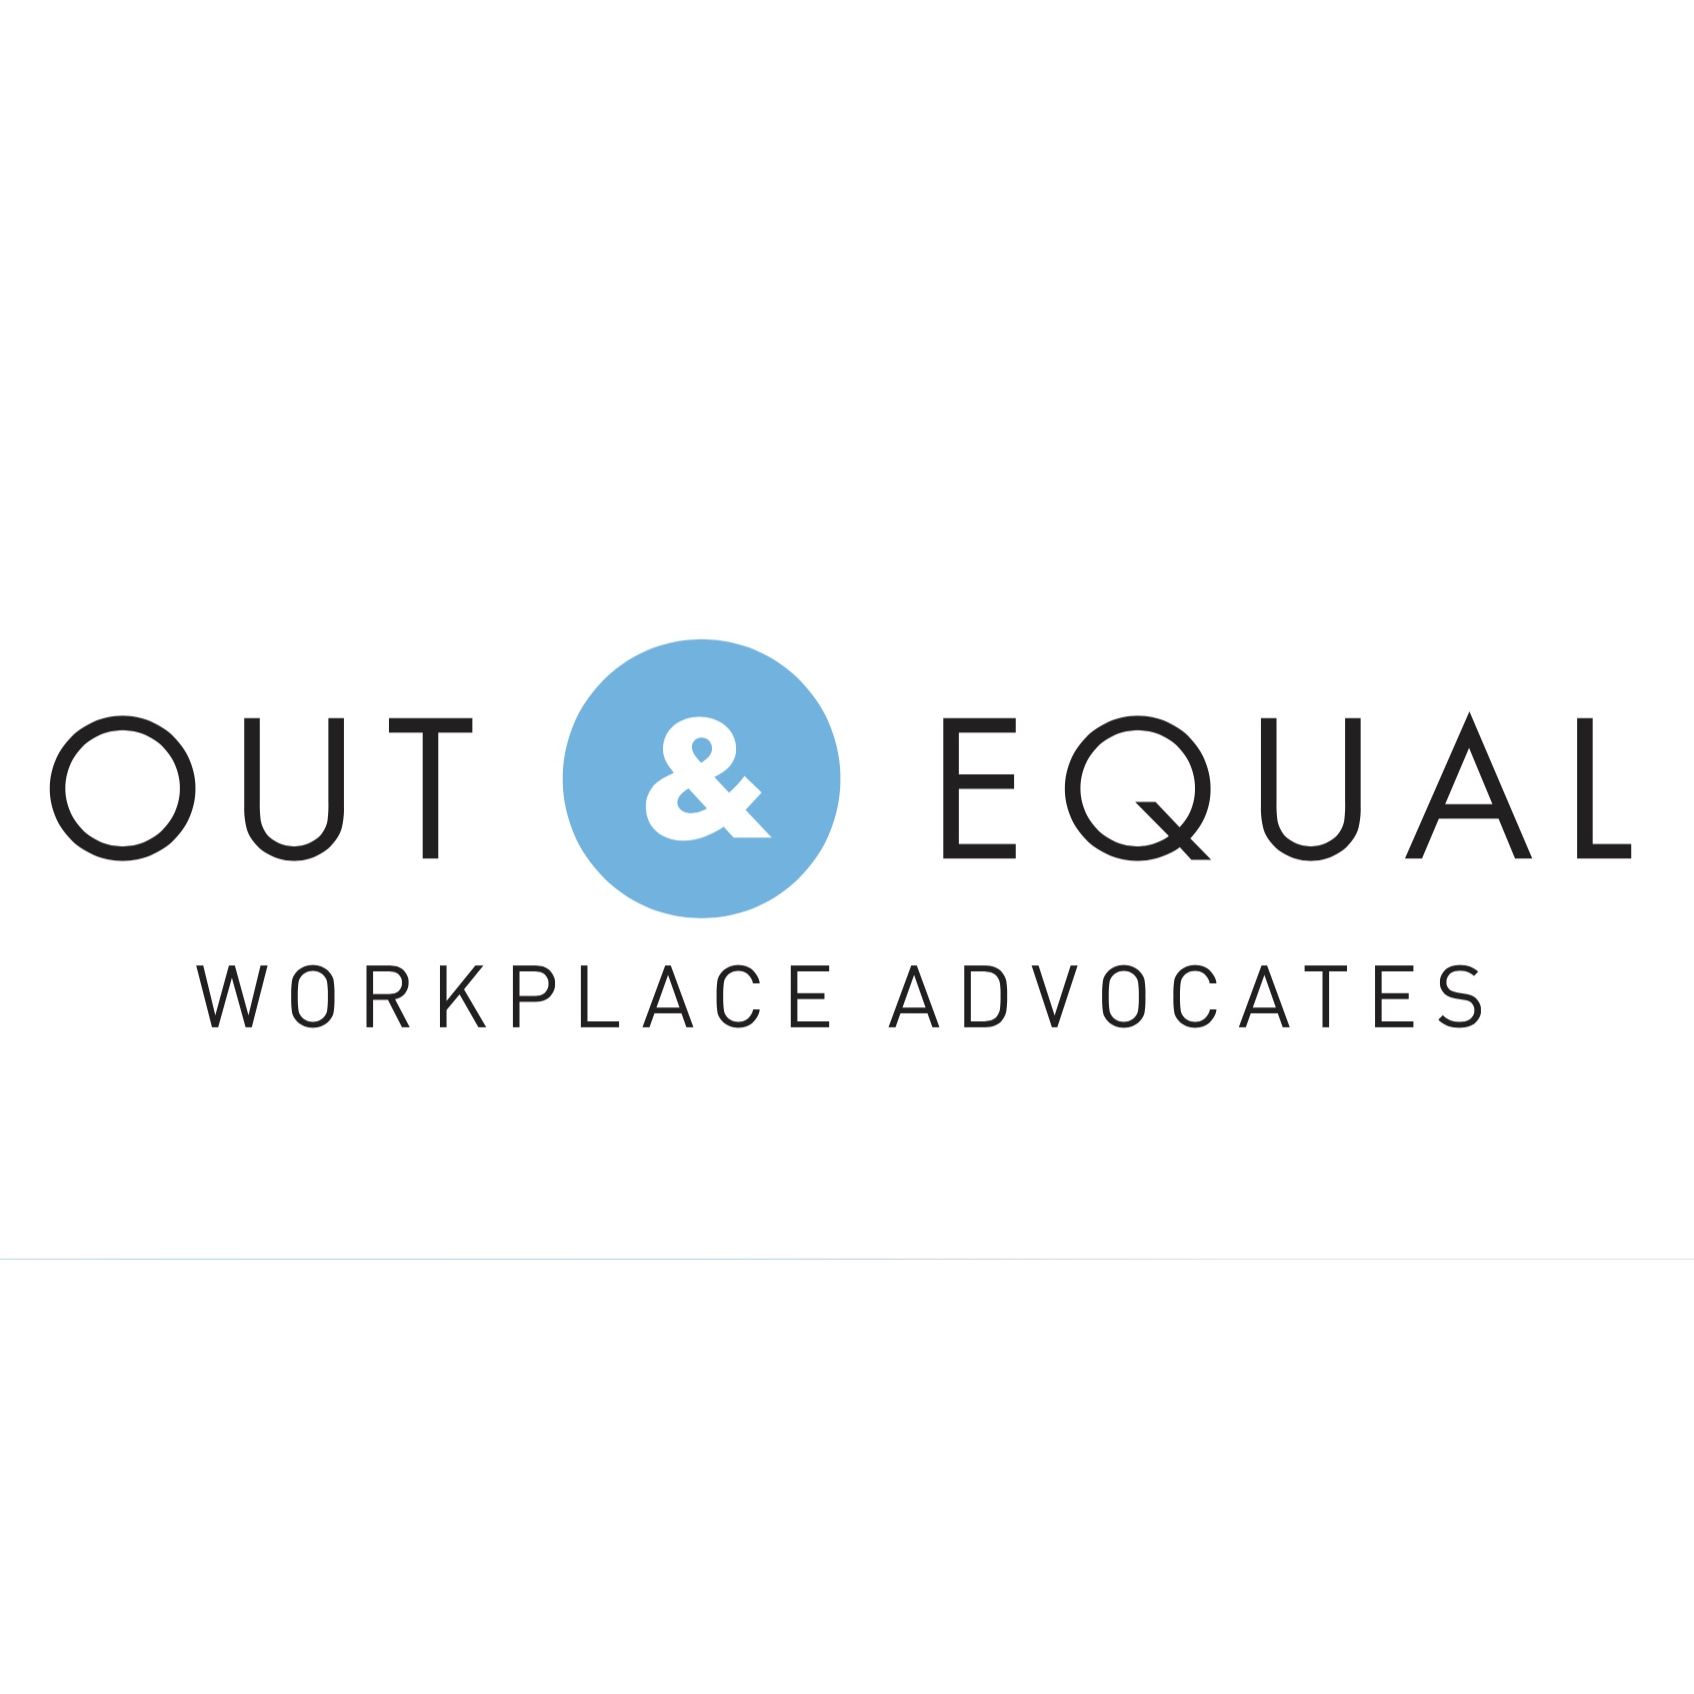 LGBTQ Organization in Los Angeles California - Out & Equal